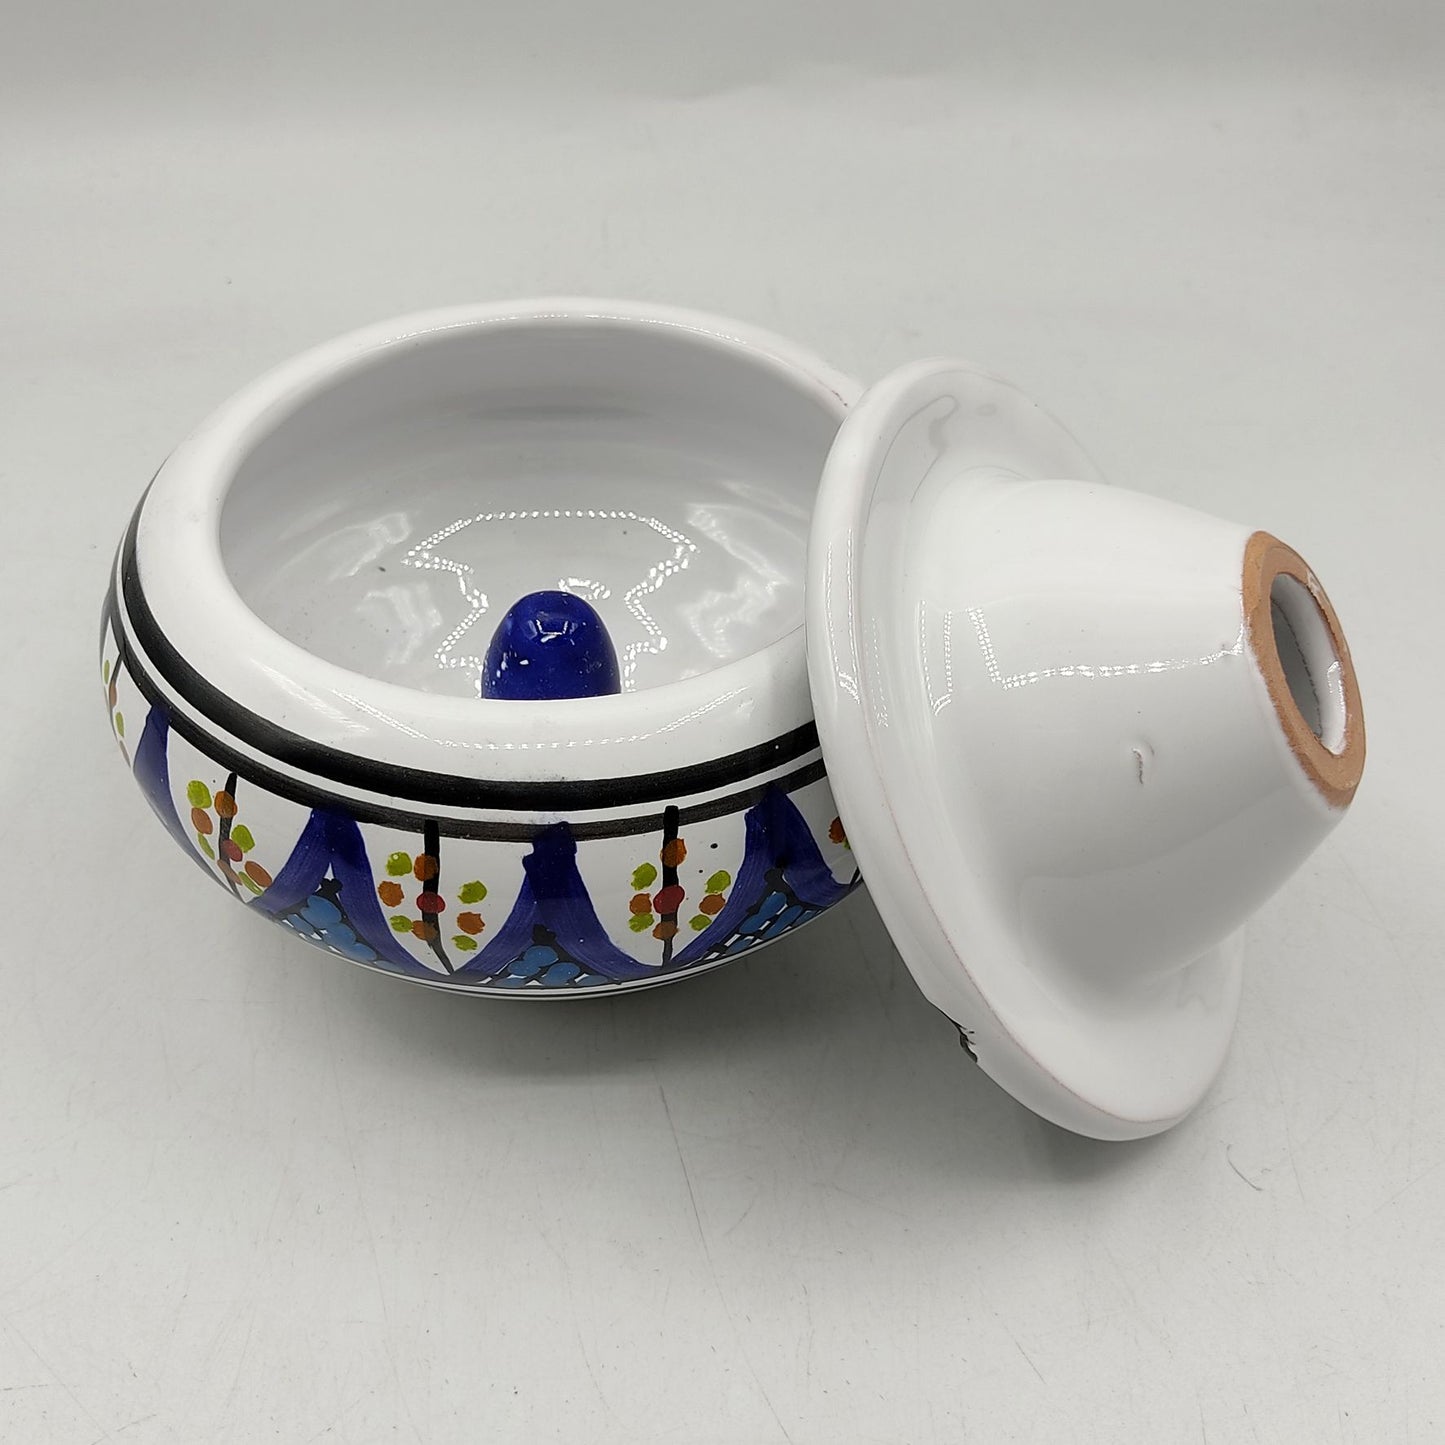 Etnico Arredo Posacenere Ceramica Antiodore Tunisina Marocchine 2007211100